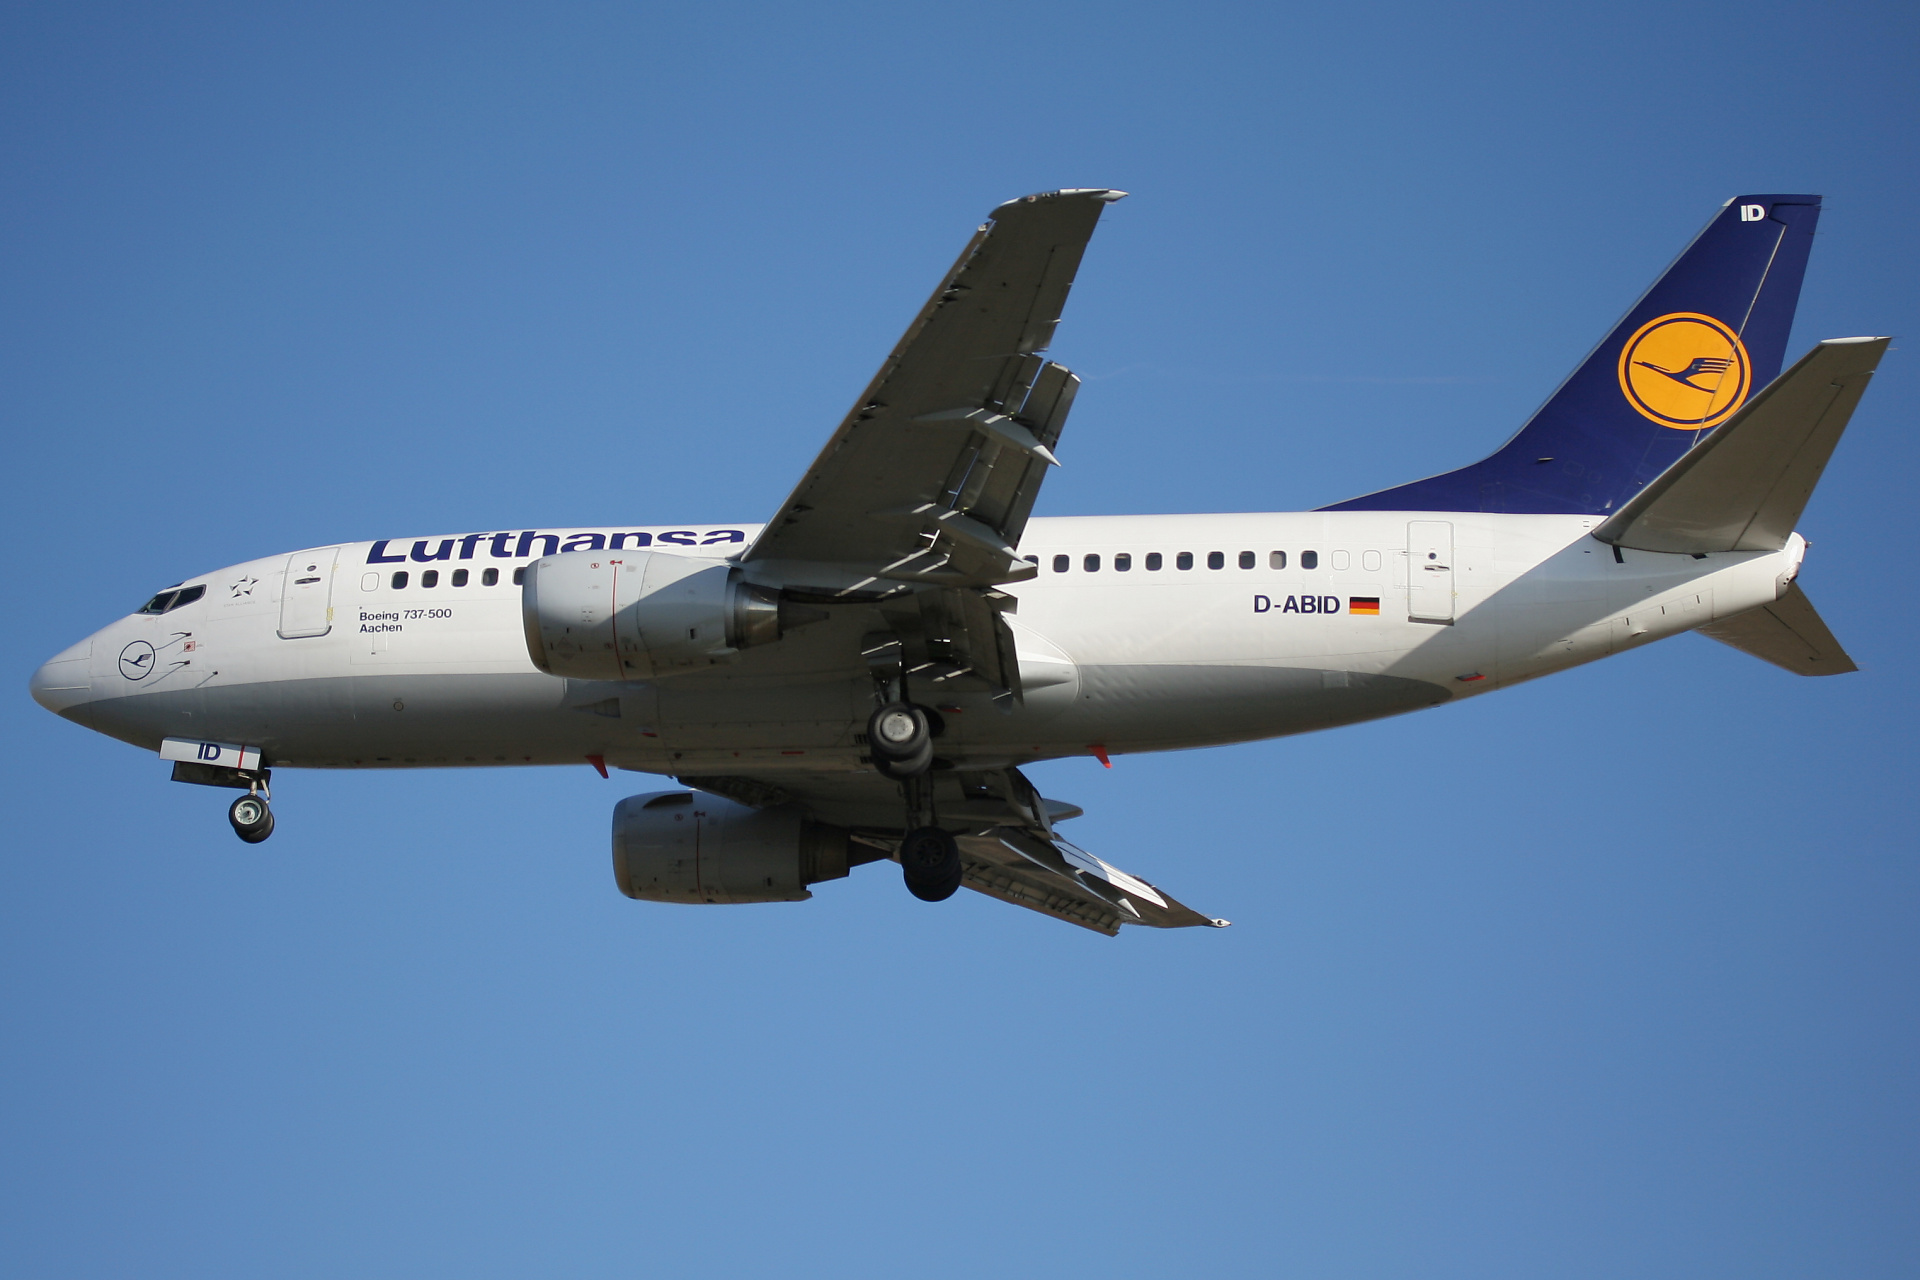 D-ABID (Aircraft » EPWA Spotting » Boeing 737-500 » Lufthansa)